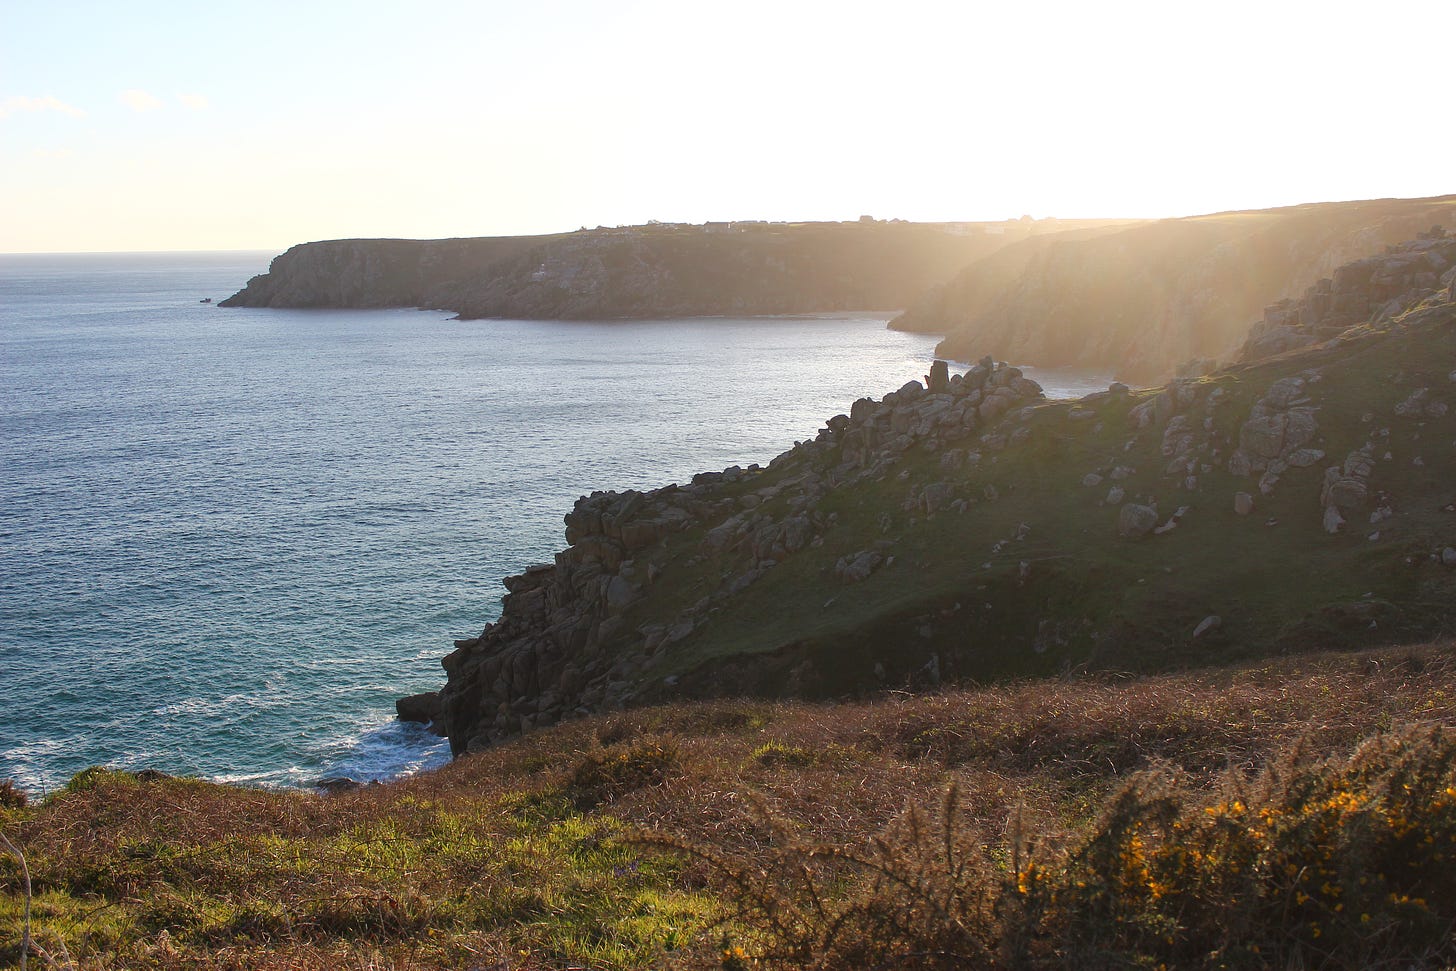 Cornish cliffs